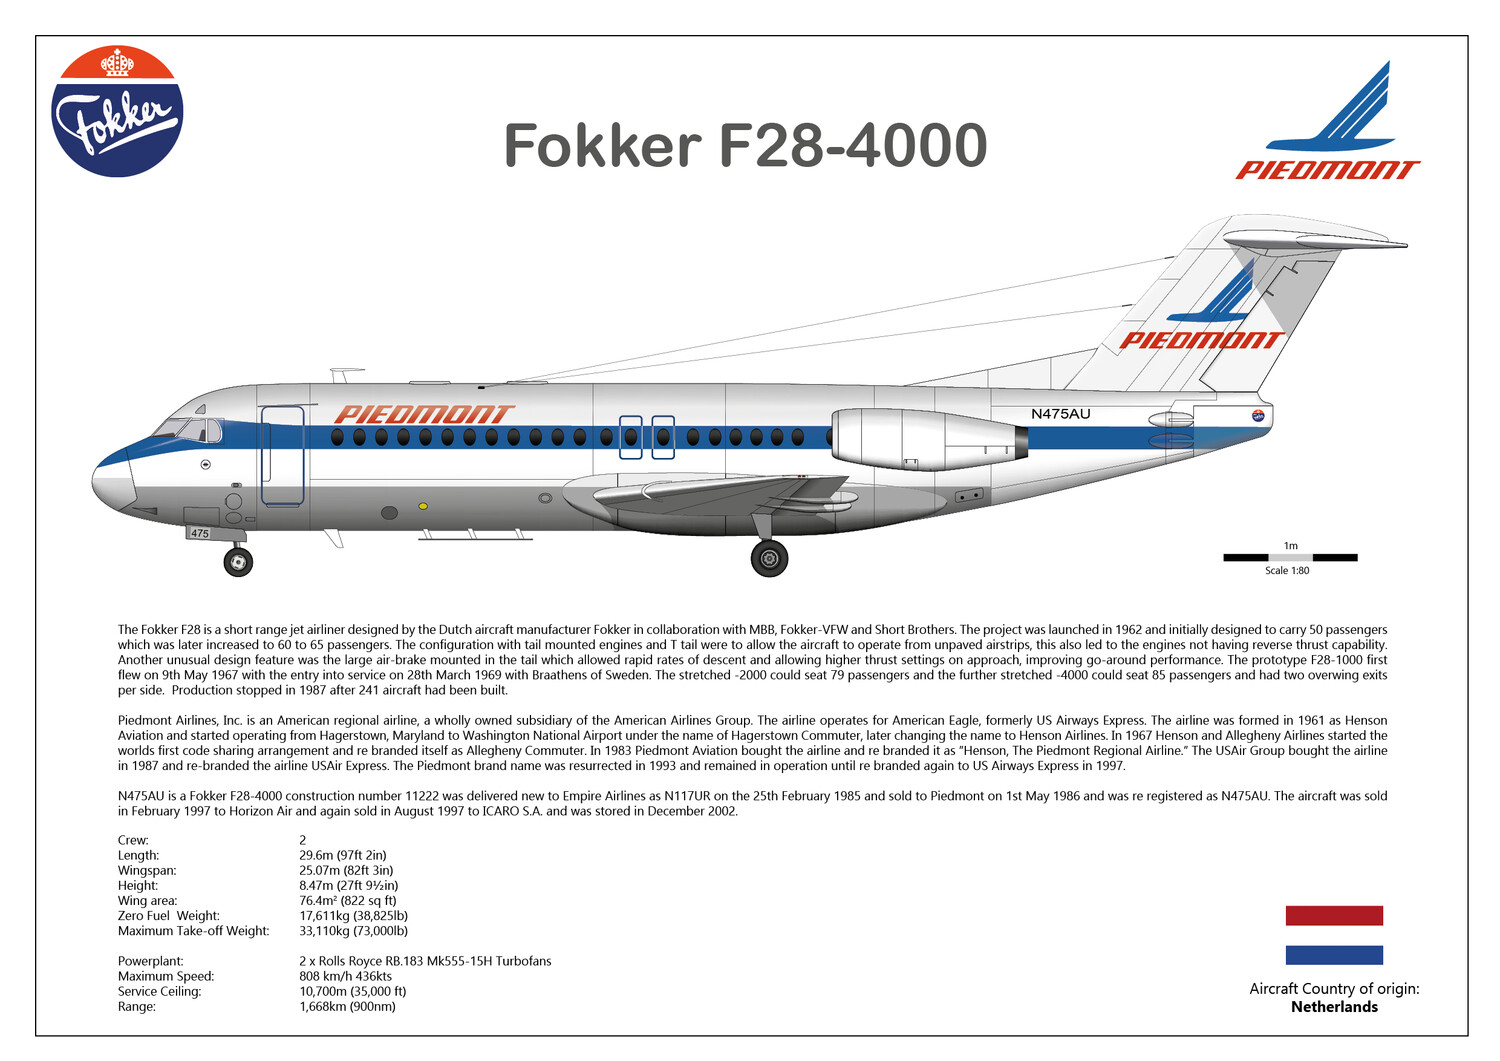 Fokker F28-4000 of Piedmont Airways